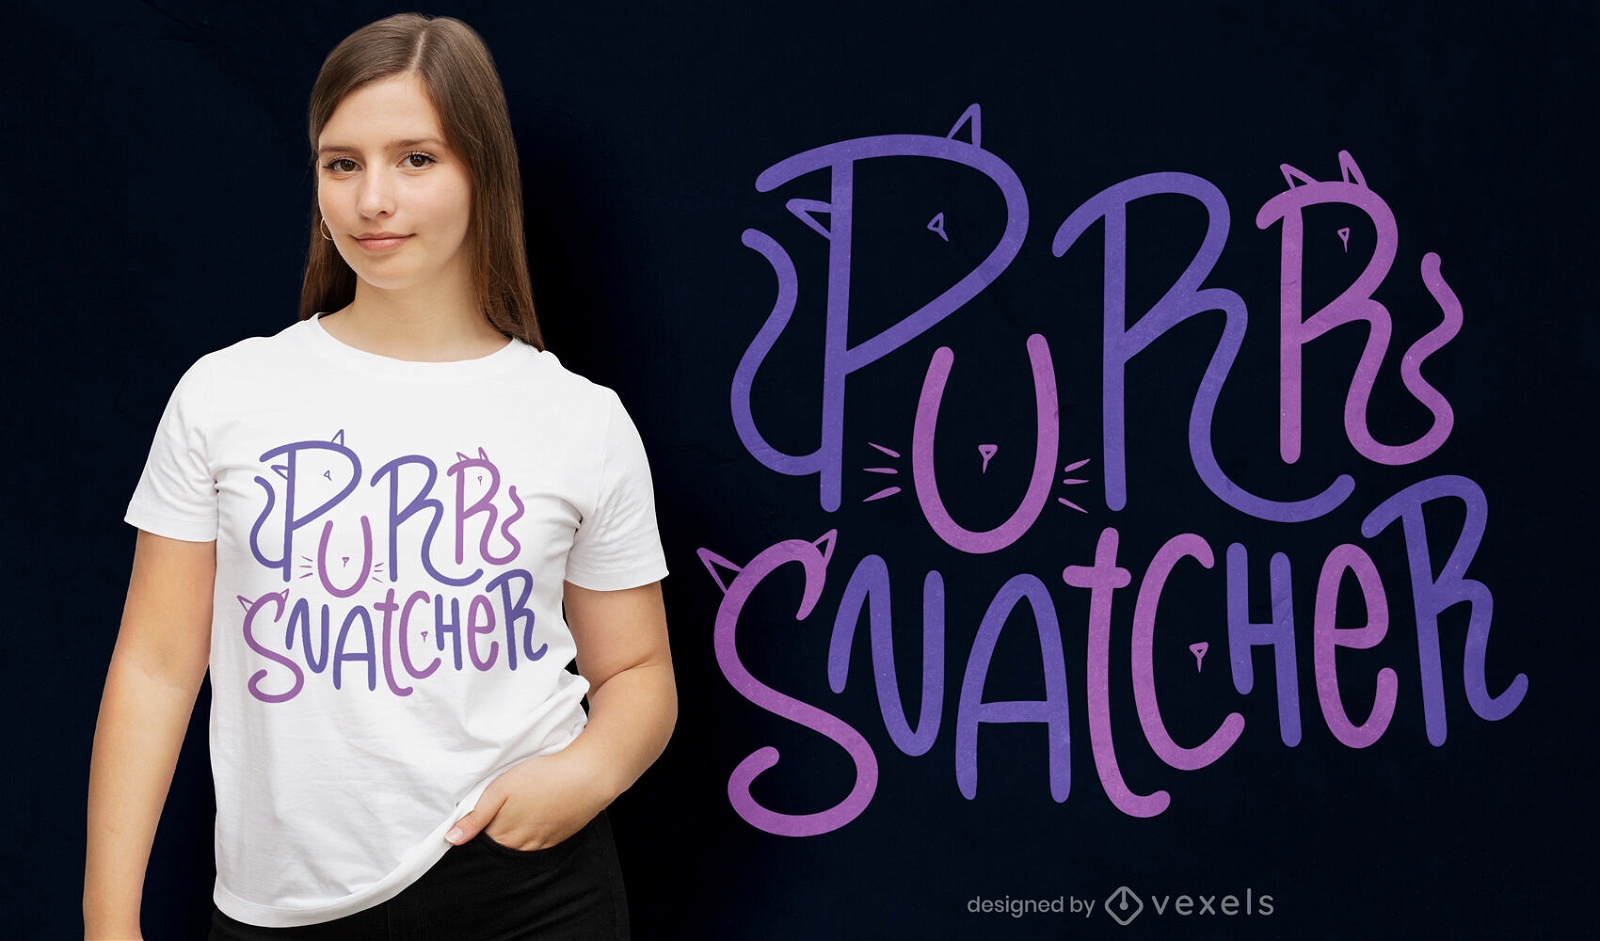 Purr snatcher lettering t-shirt design